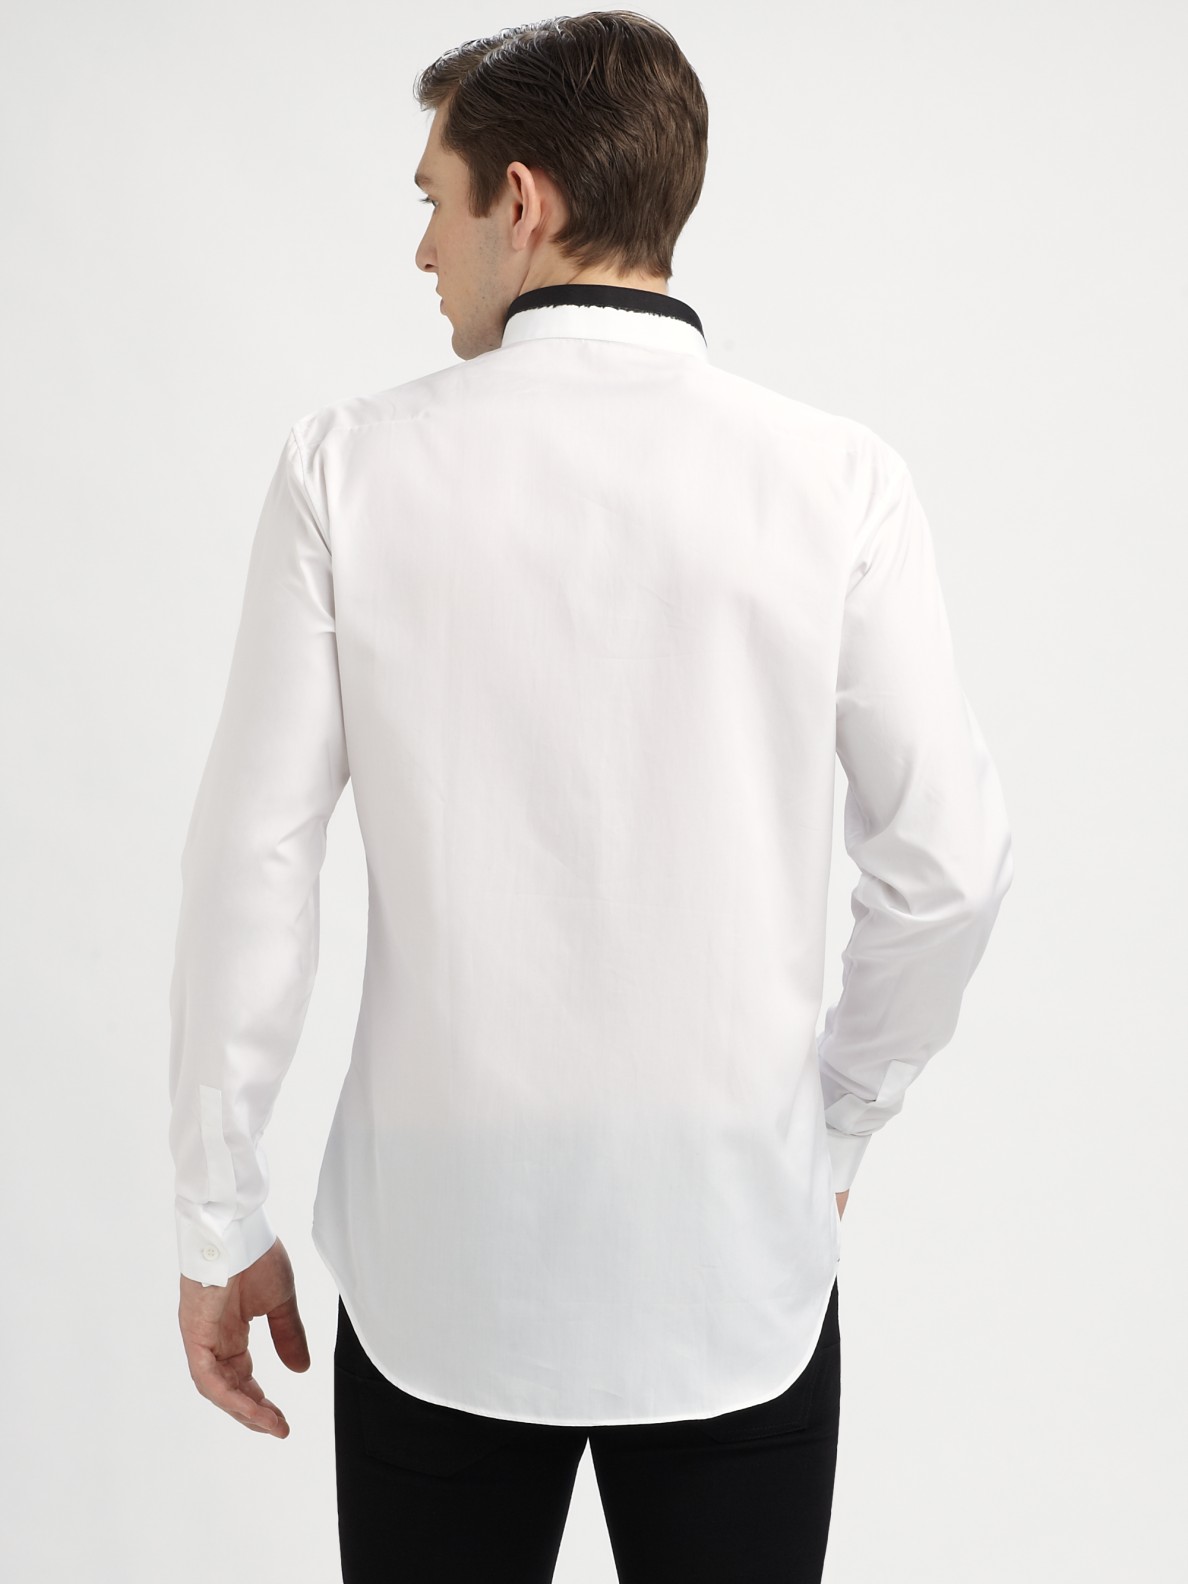 Dior Homme Reverse-collar Shirt in White for Men | Lyst